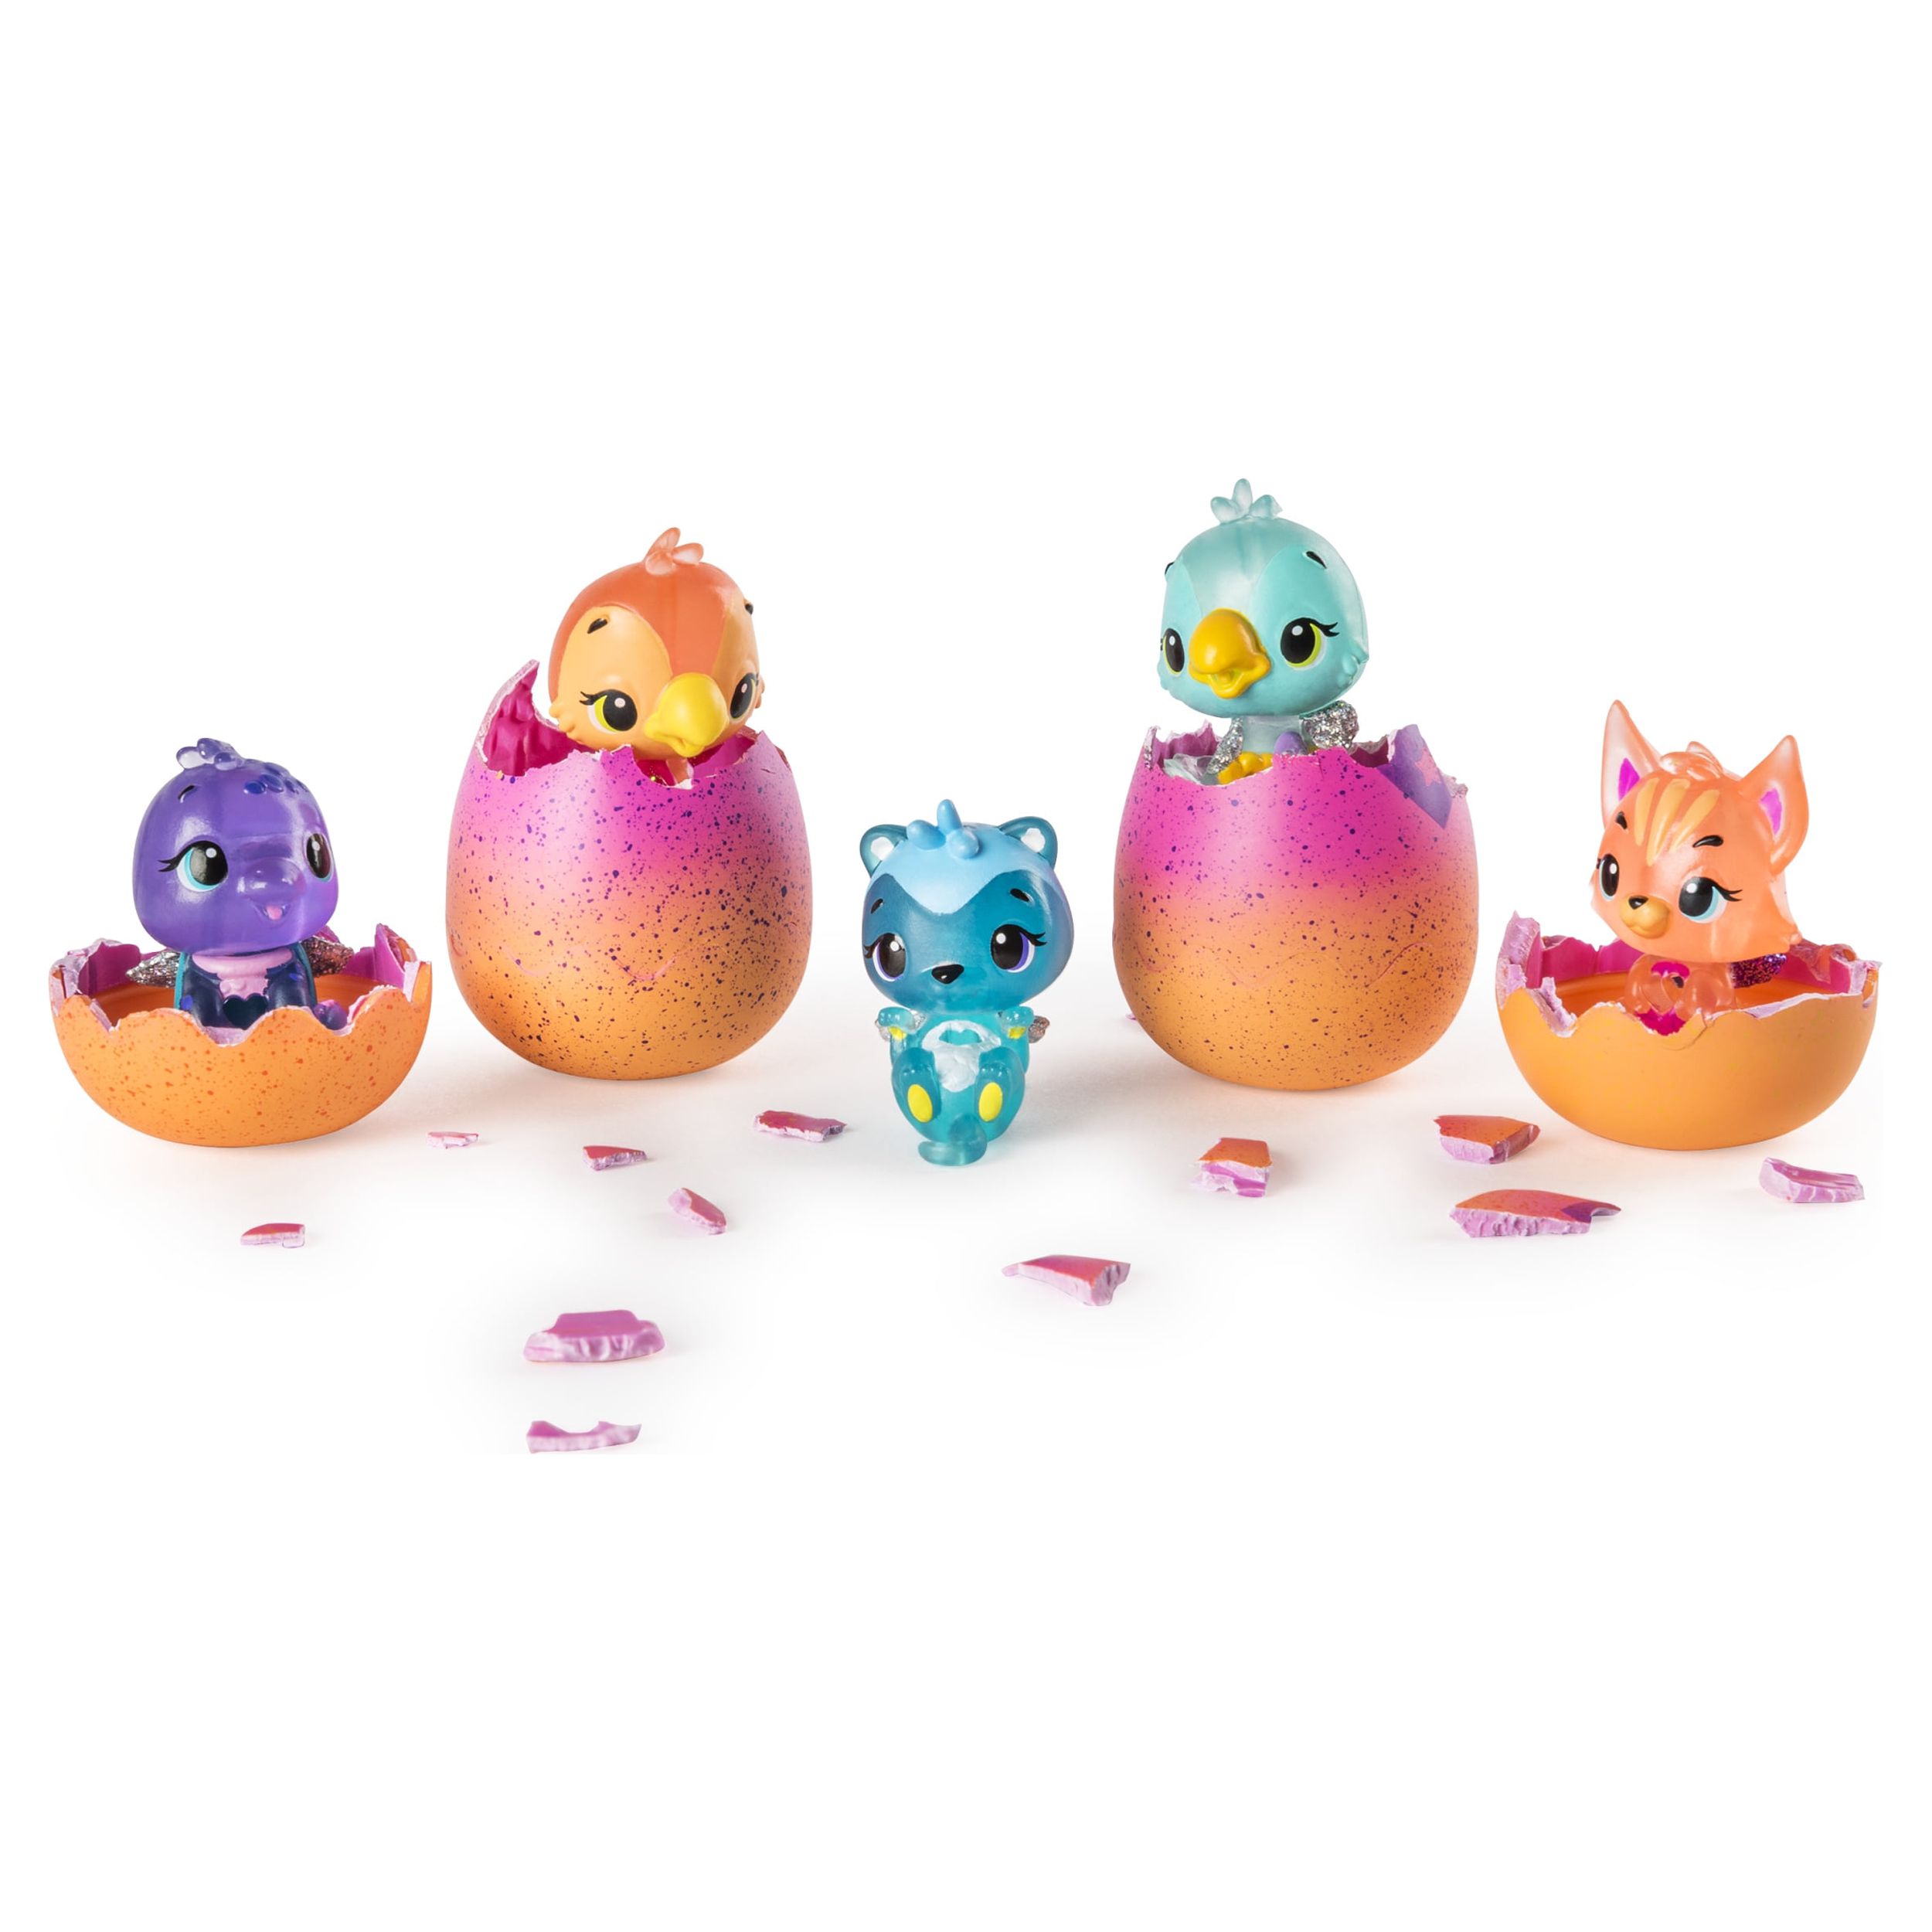 Hatchimals CollEGGtibles, 4 Pack + Bonus, Season 4 Hatchimals CollEGGtible, for Ages 5 and up (Styles and Colors May Vary) - image 4 of 7